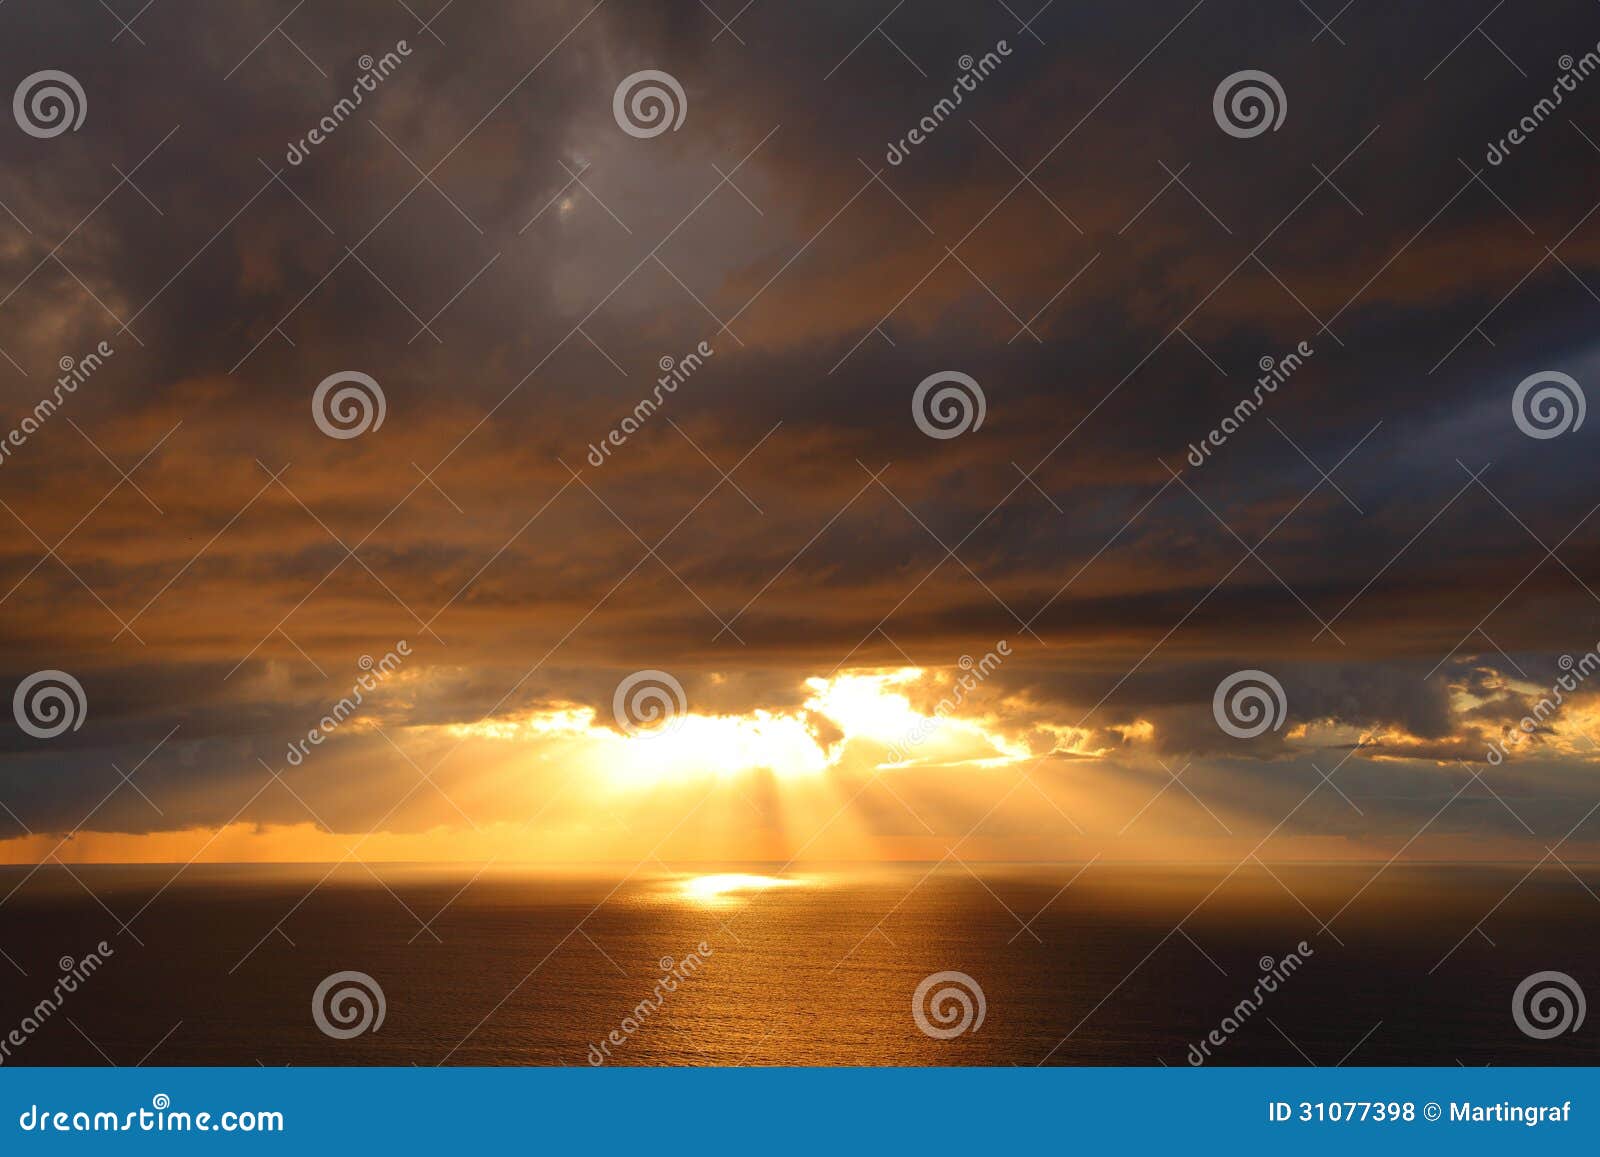 sunbeams through storm clouds over ocean by golden sunrise